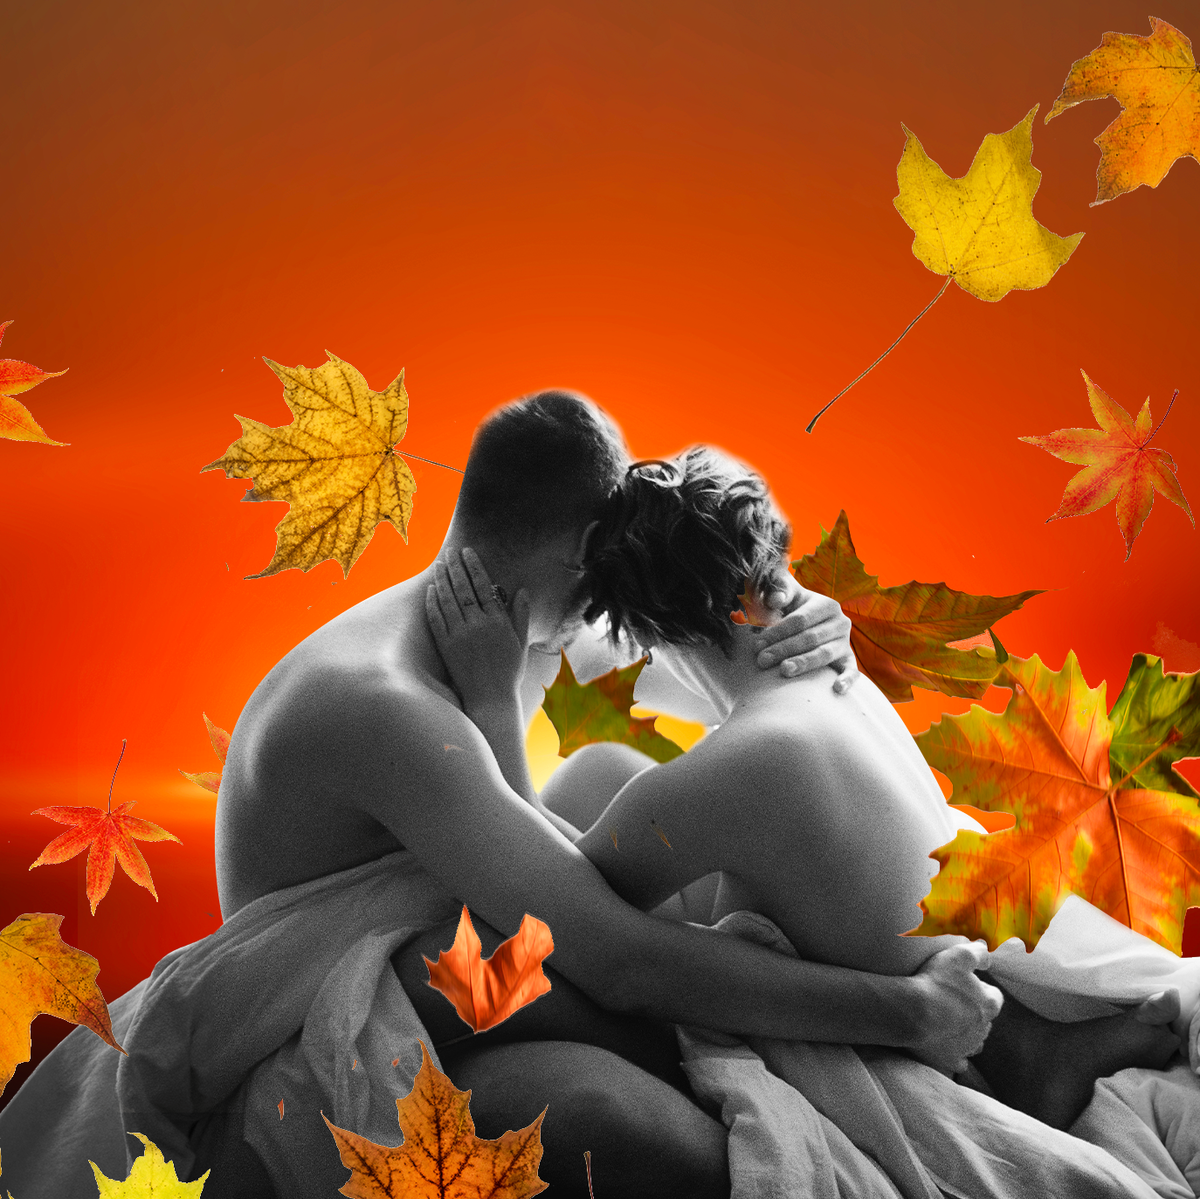 32 Romantic Fall Date Ideas - Fun Autumn Dates for Couples